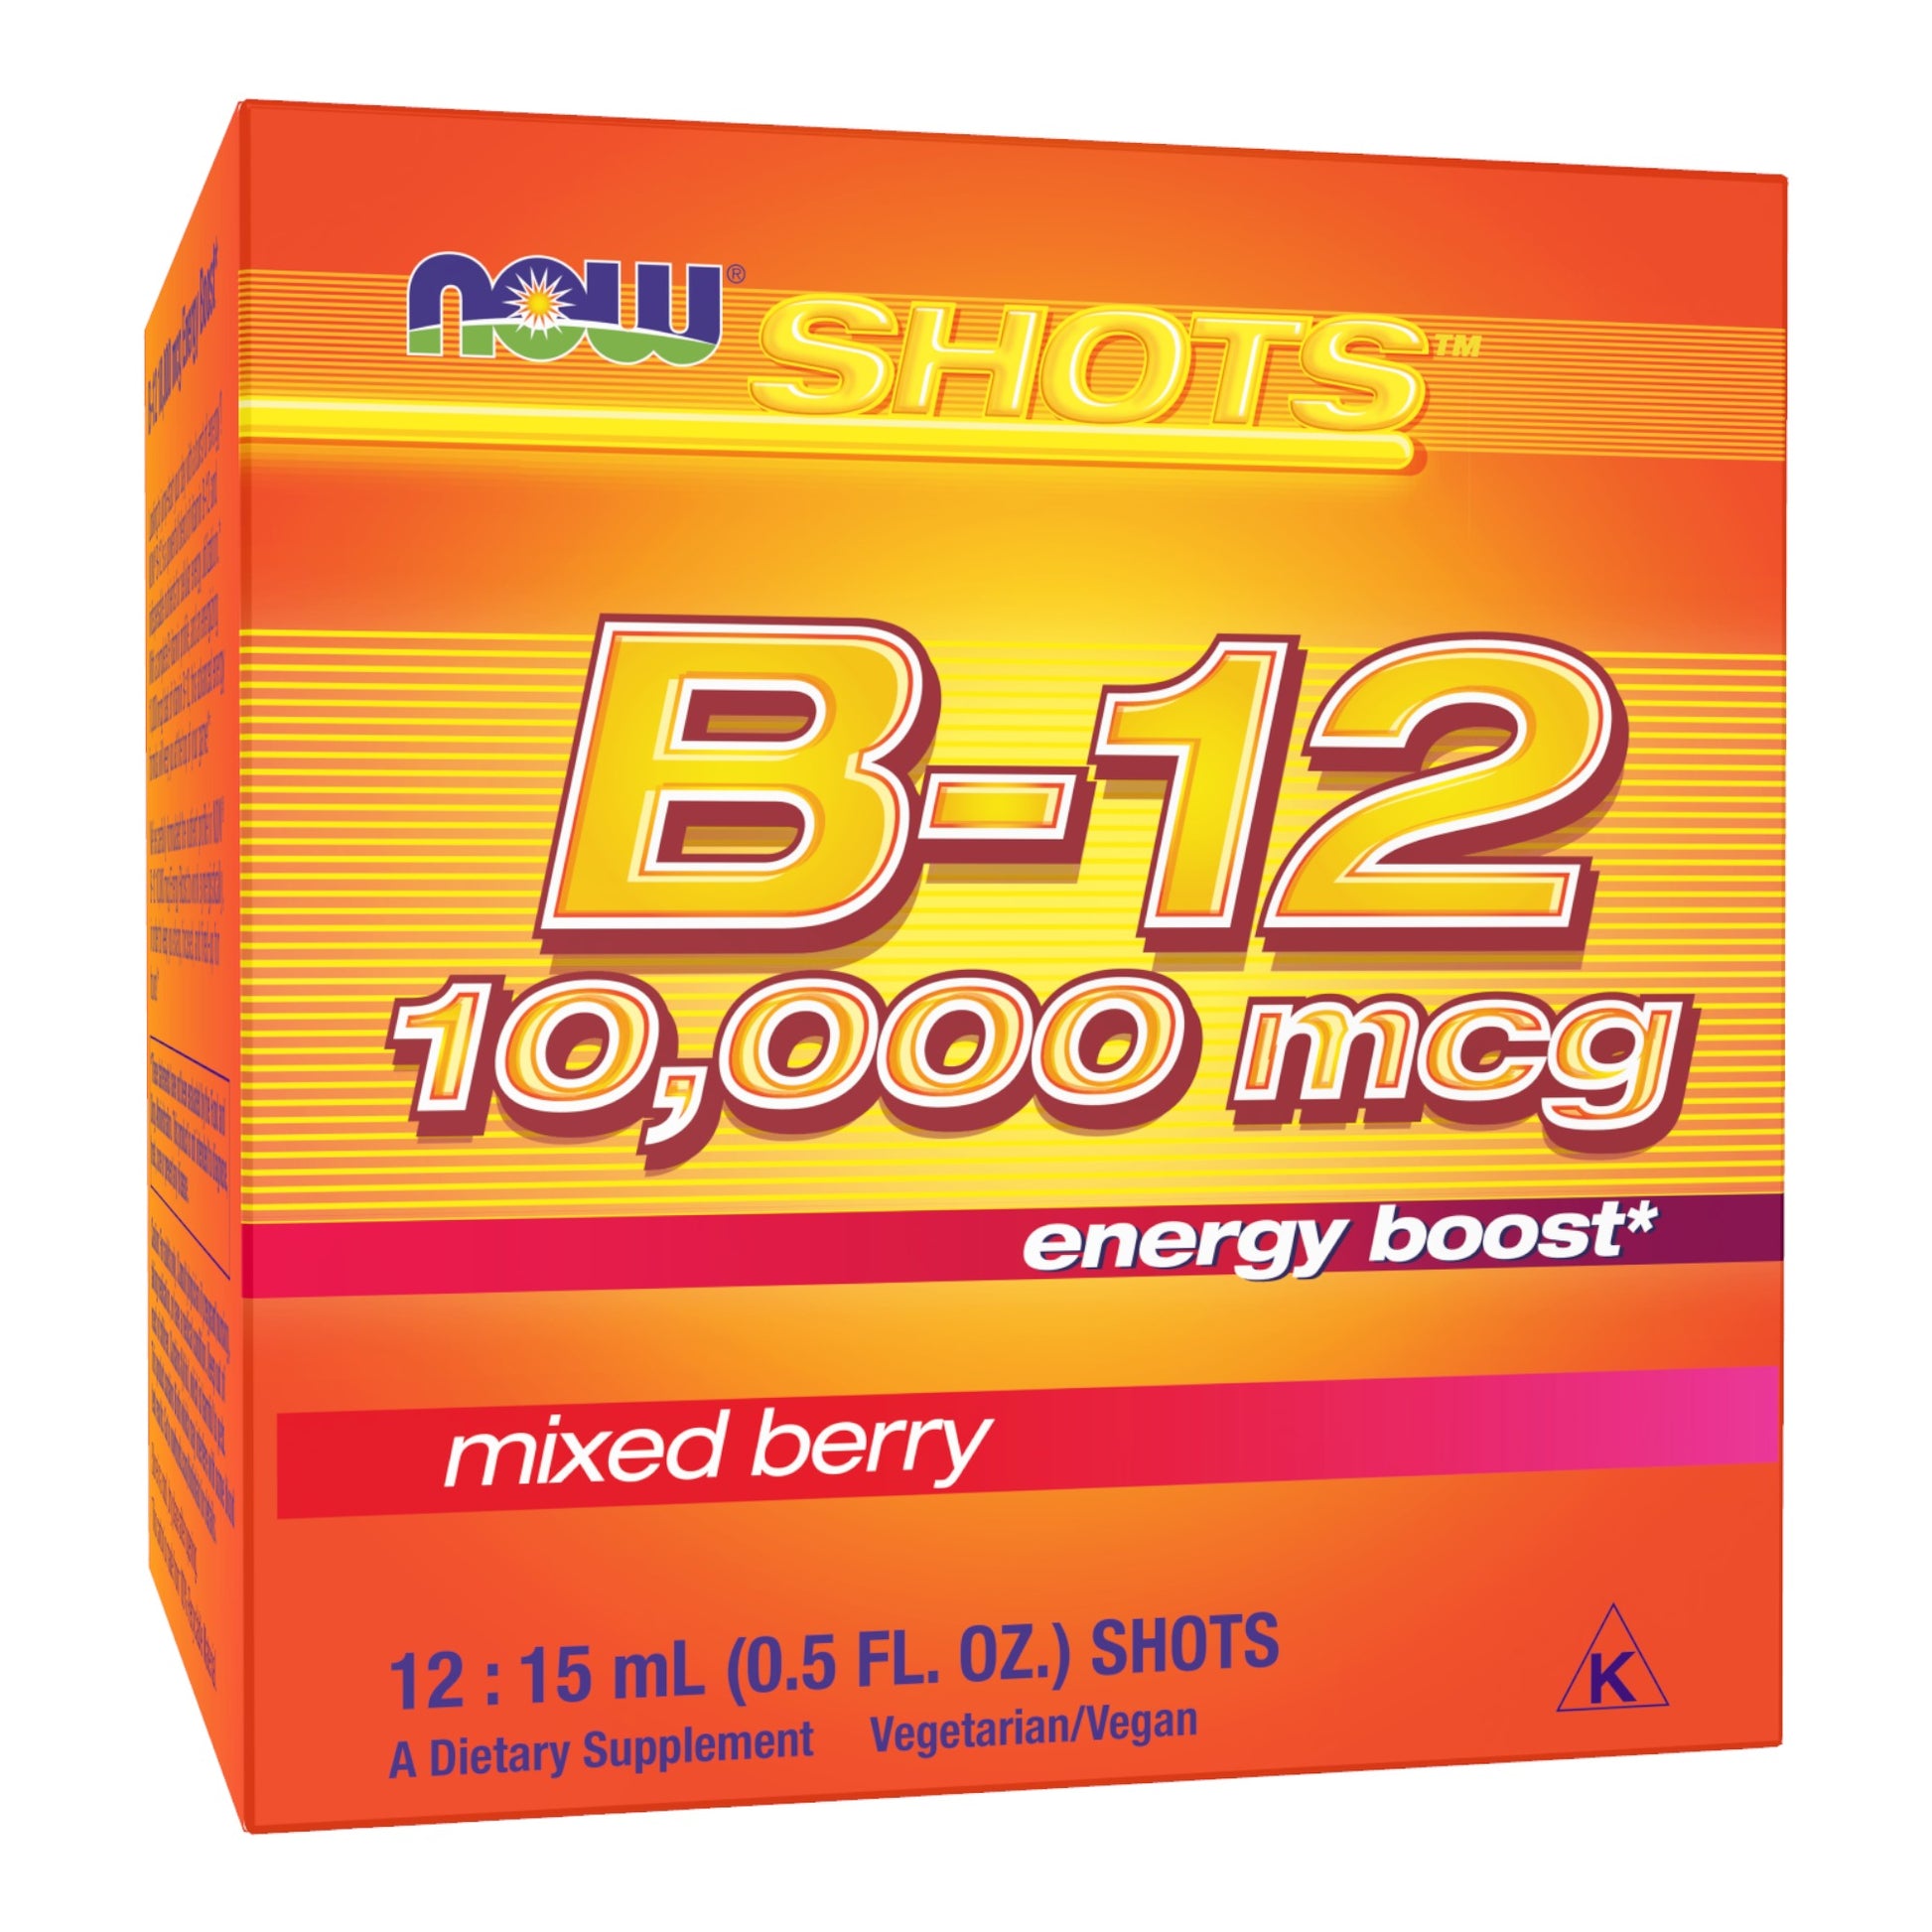 B-12 10,000 mcg - 12x15 mL (0.5 fl. oz.) Shots